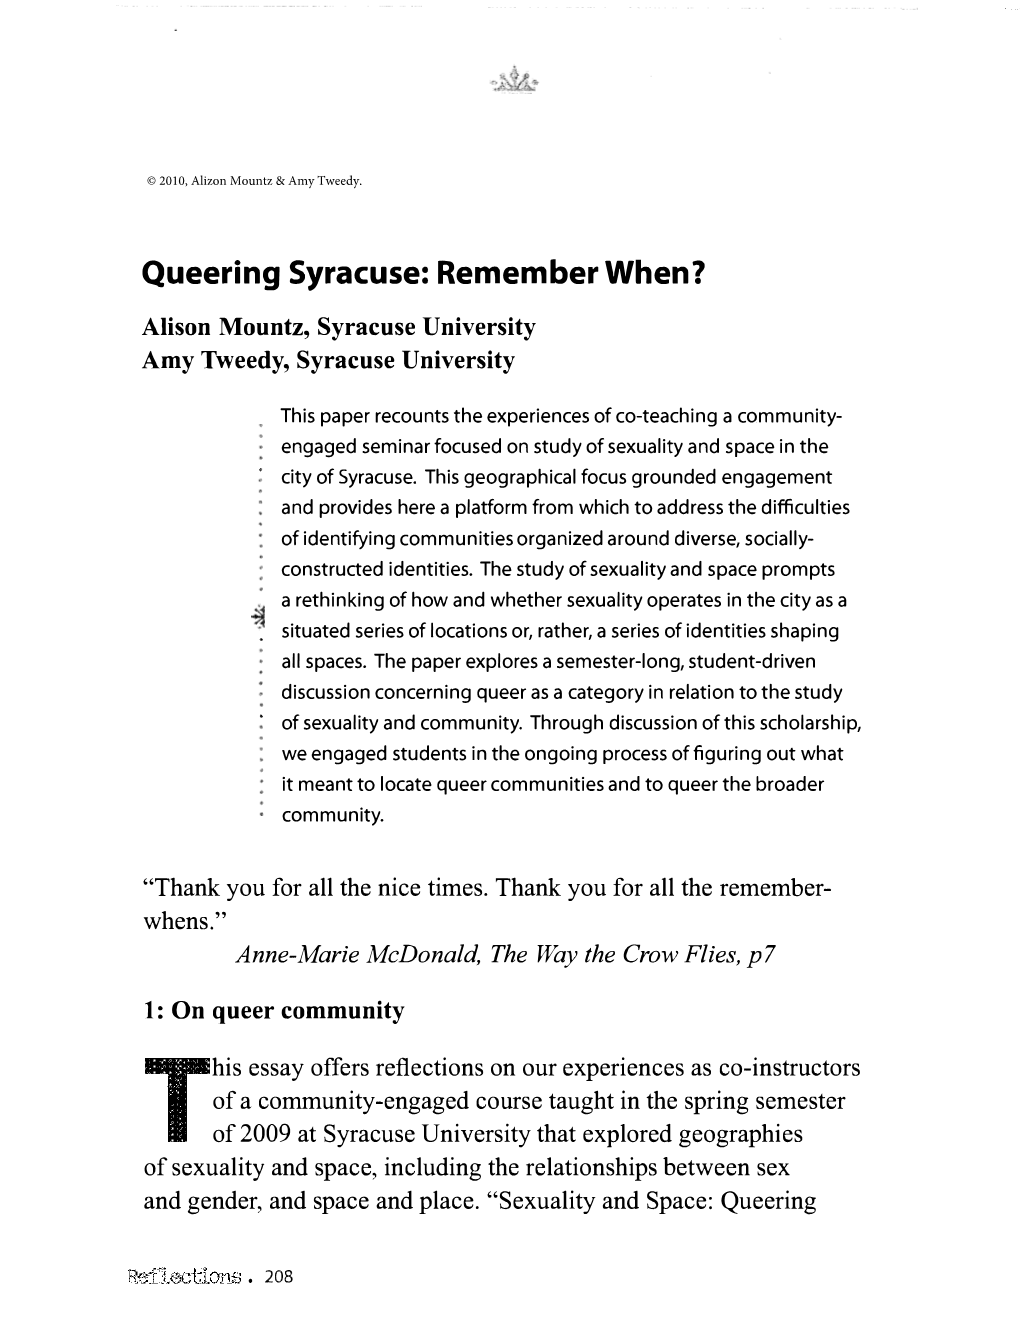 Queering Syracuse: Remember When? Alison Mountz, Syracuse University Amy Tweedy, Syracuse University